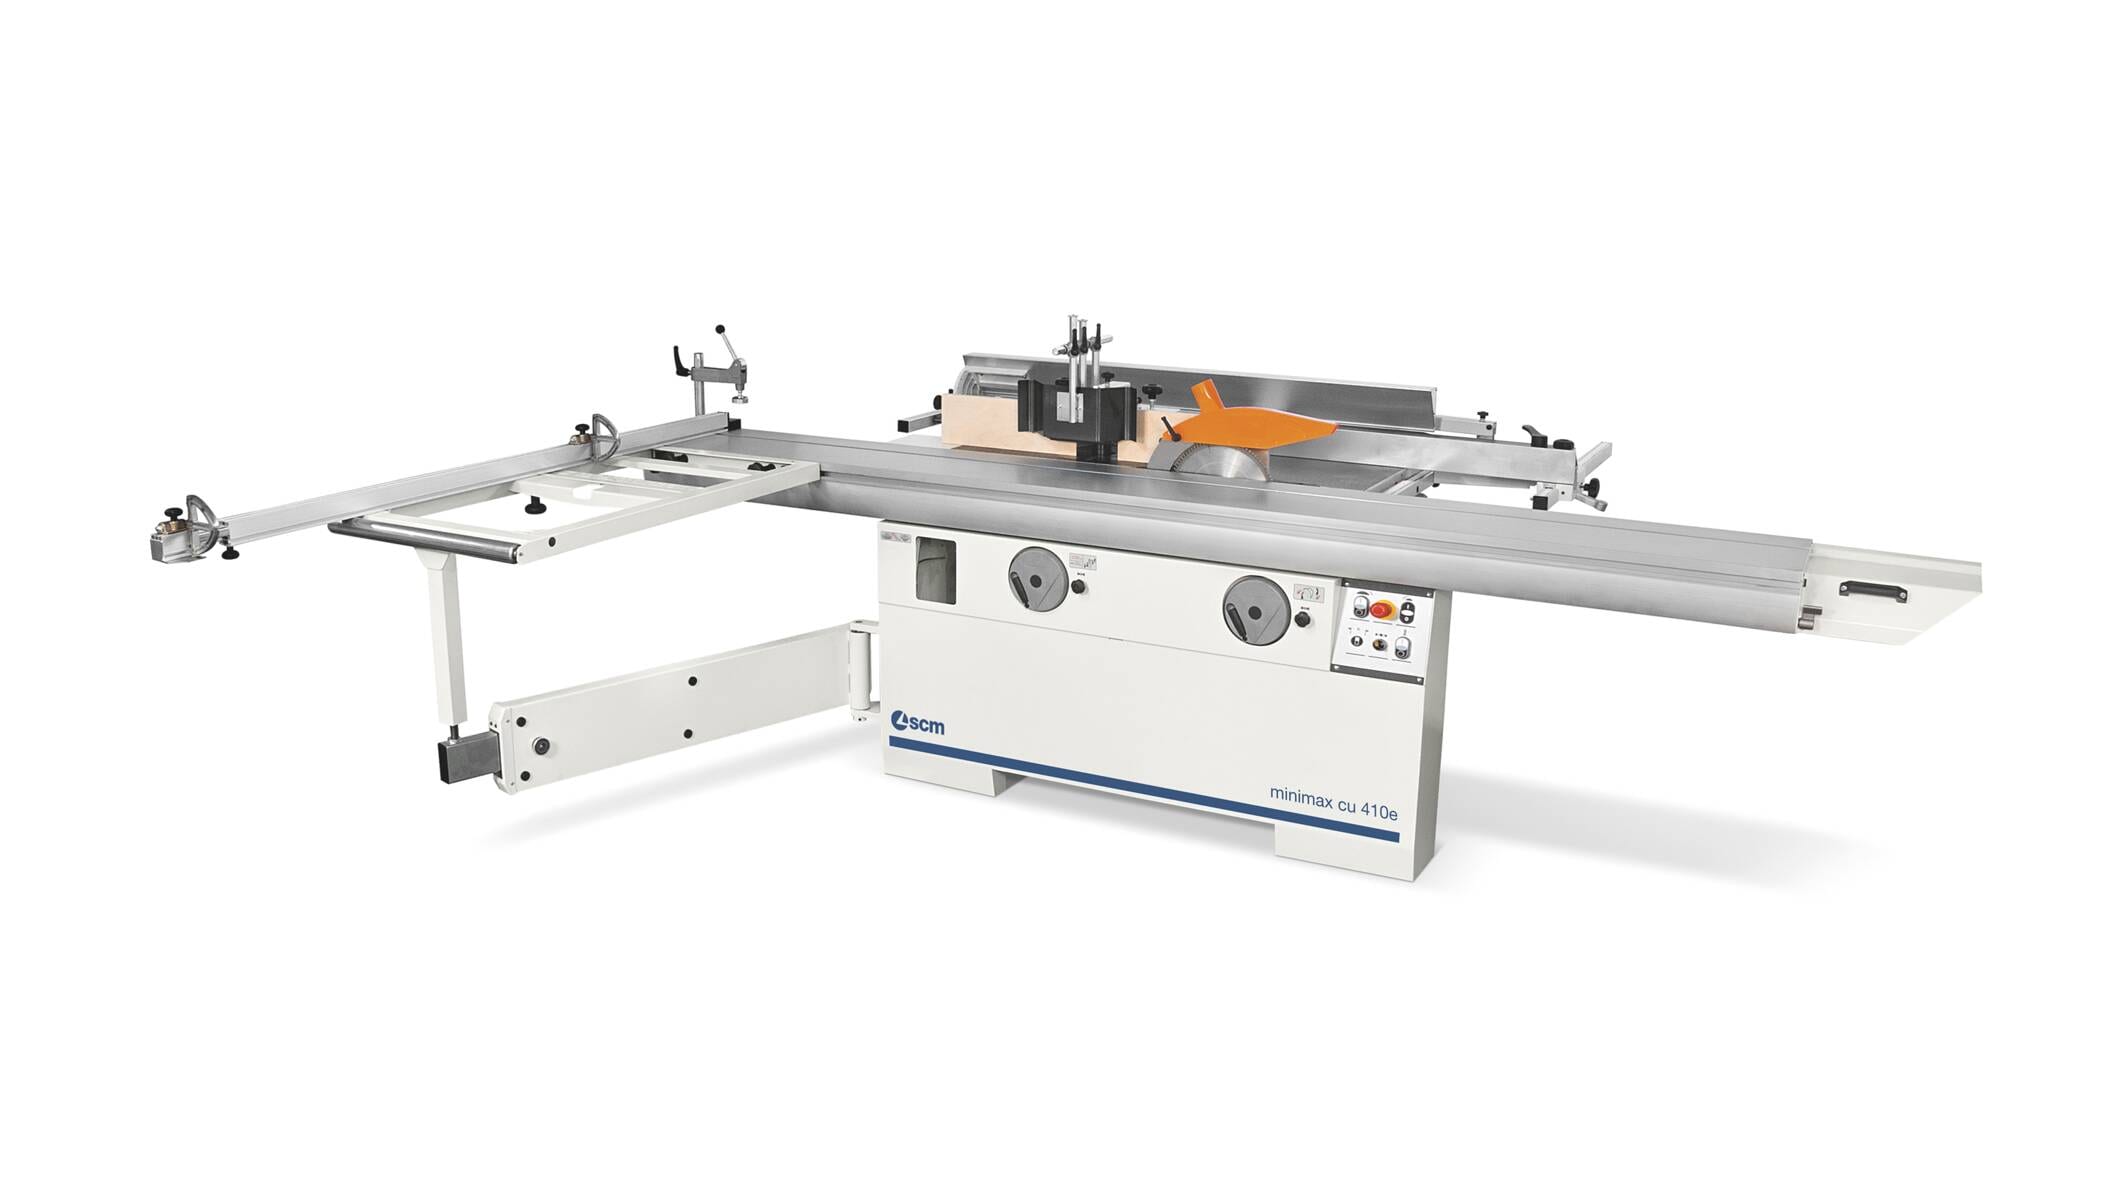 Tischlereimaschinen - Universal Kombimaschinen - minimax cu 410e